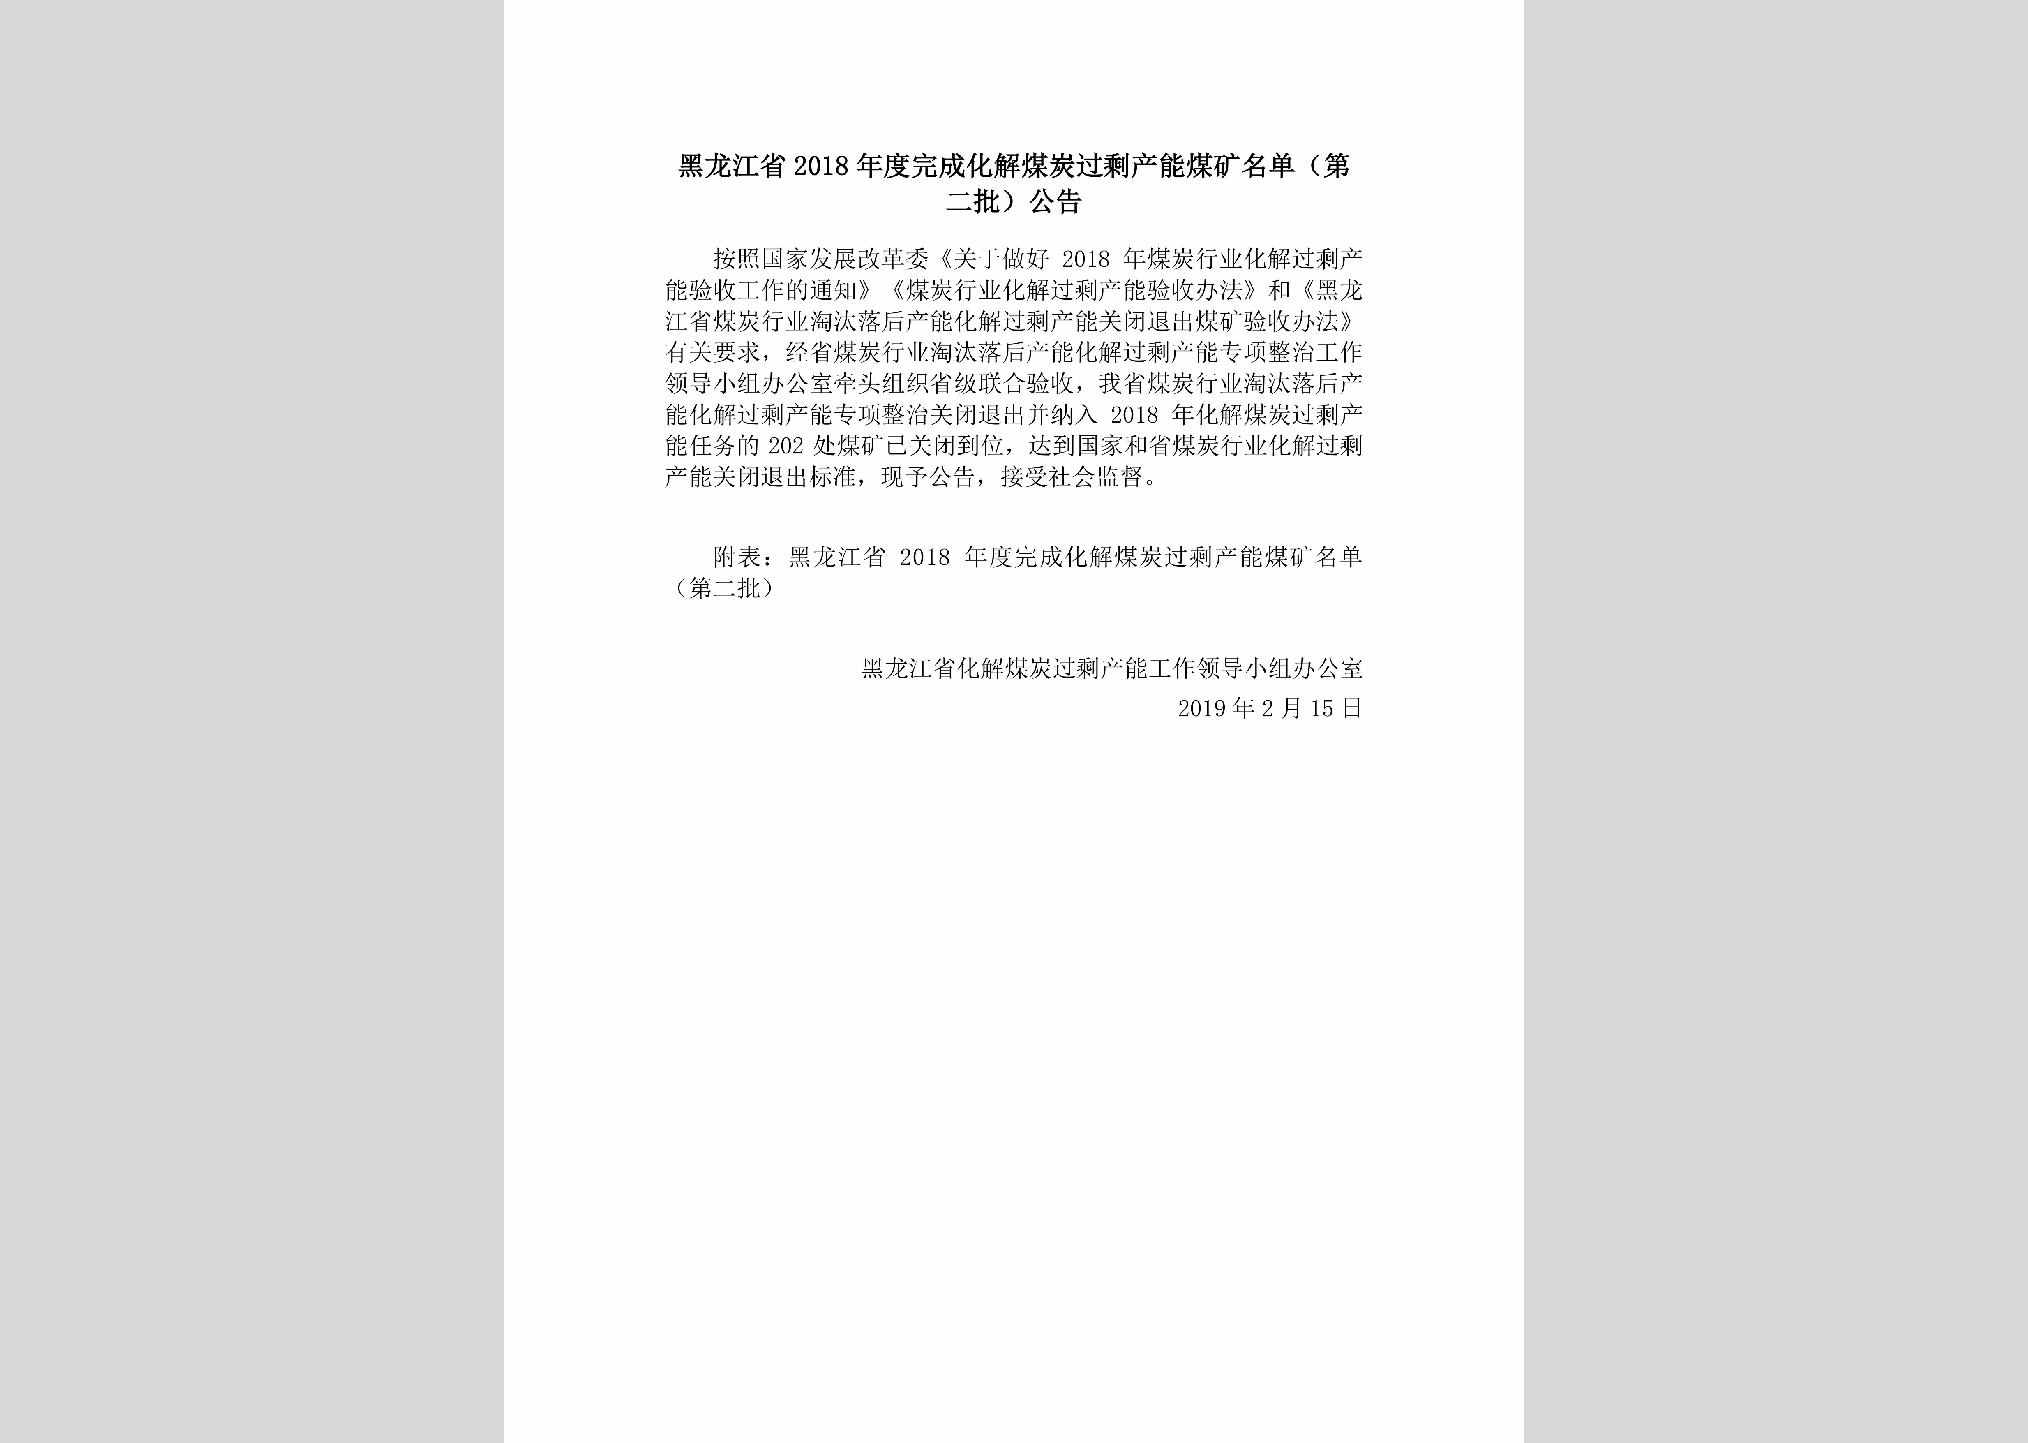 HLJ-WCHJMTGS-2019：黑龙江省2018年度完成化解煤炭过剩产能煤矿名单（第二批）公告